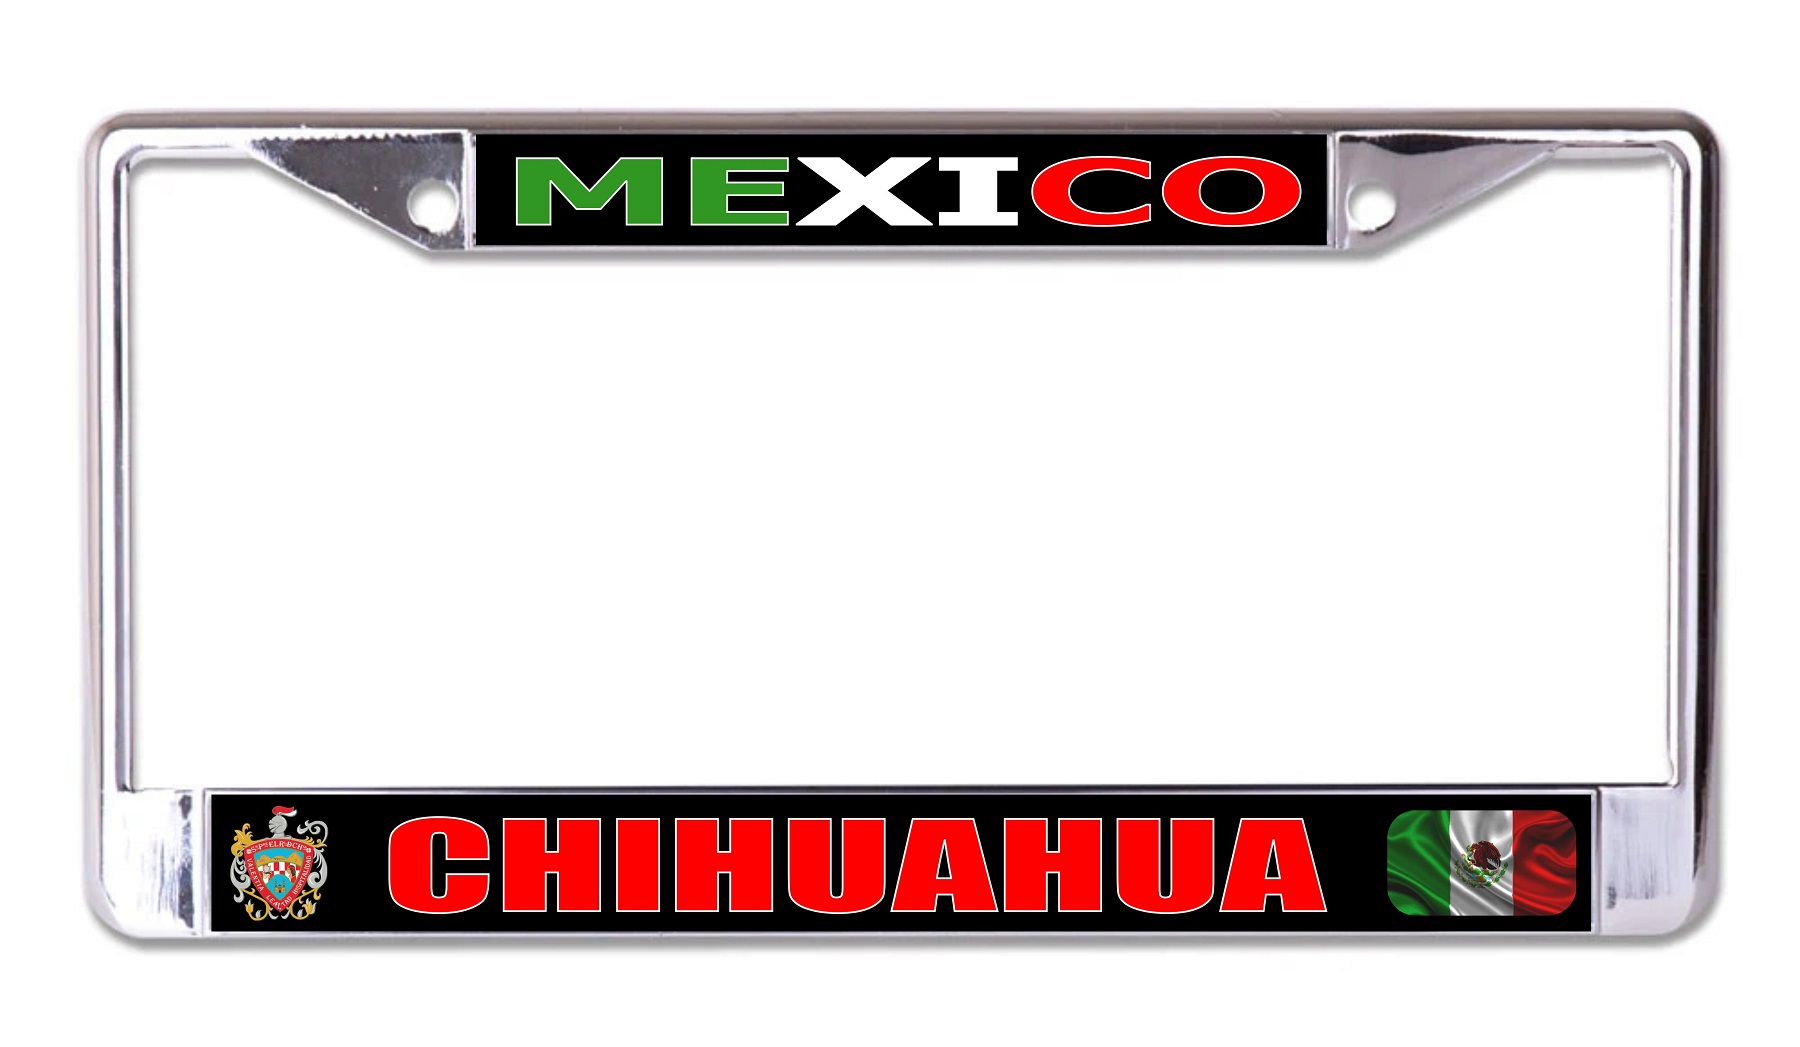 Mexico Chihuahua Chrome License Plate FRAME